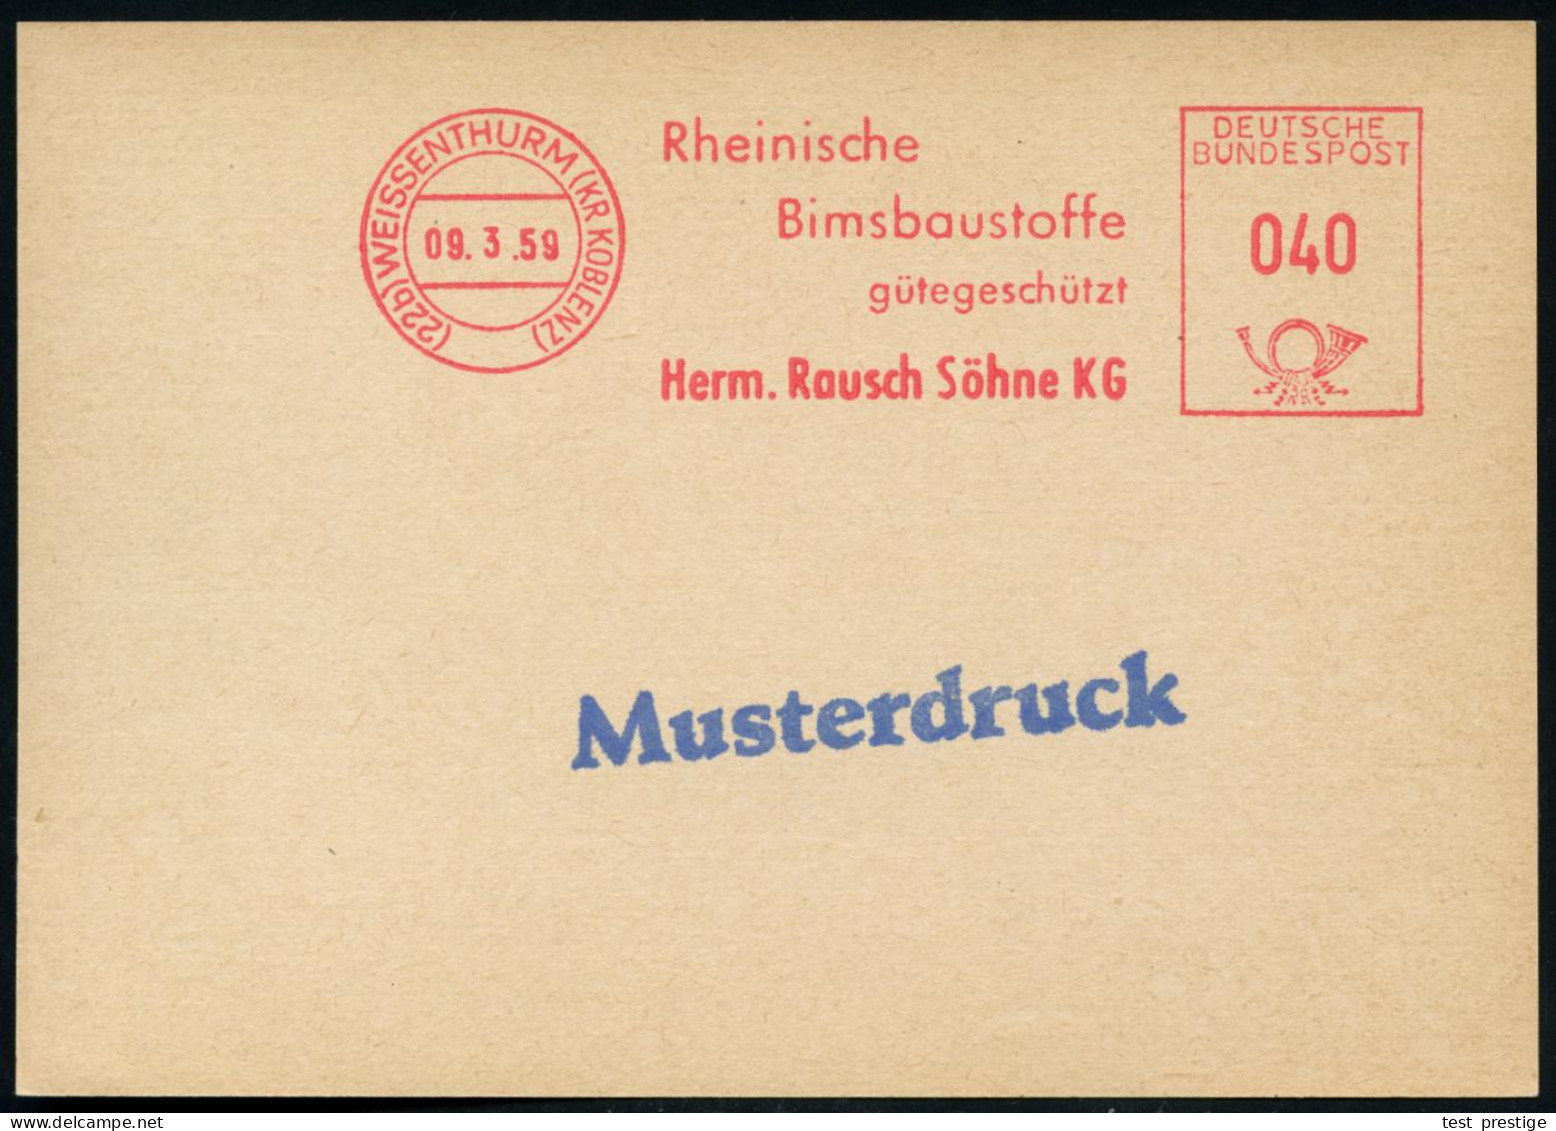 (22b) WEISSENTHURM (KR KOBLENZ)/ Rhein./ Bimsbaustoffe/ Gütegeschütz/ Herm.Rausch Söhne KG 1959 (9.3.) AFS 040 Pf. Franc - Chemistry